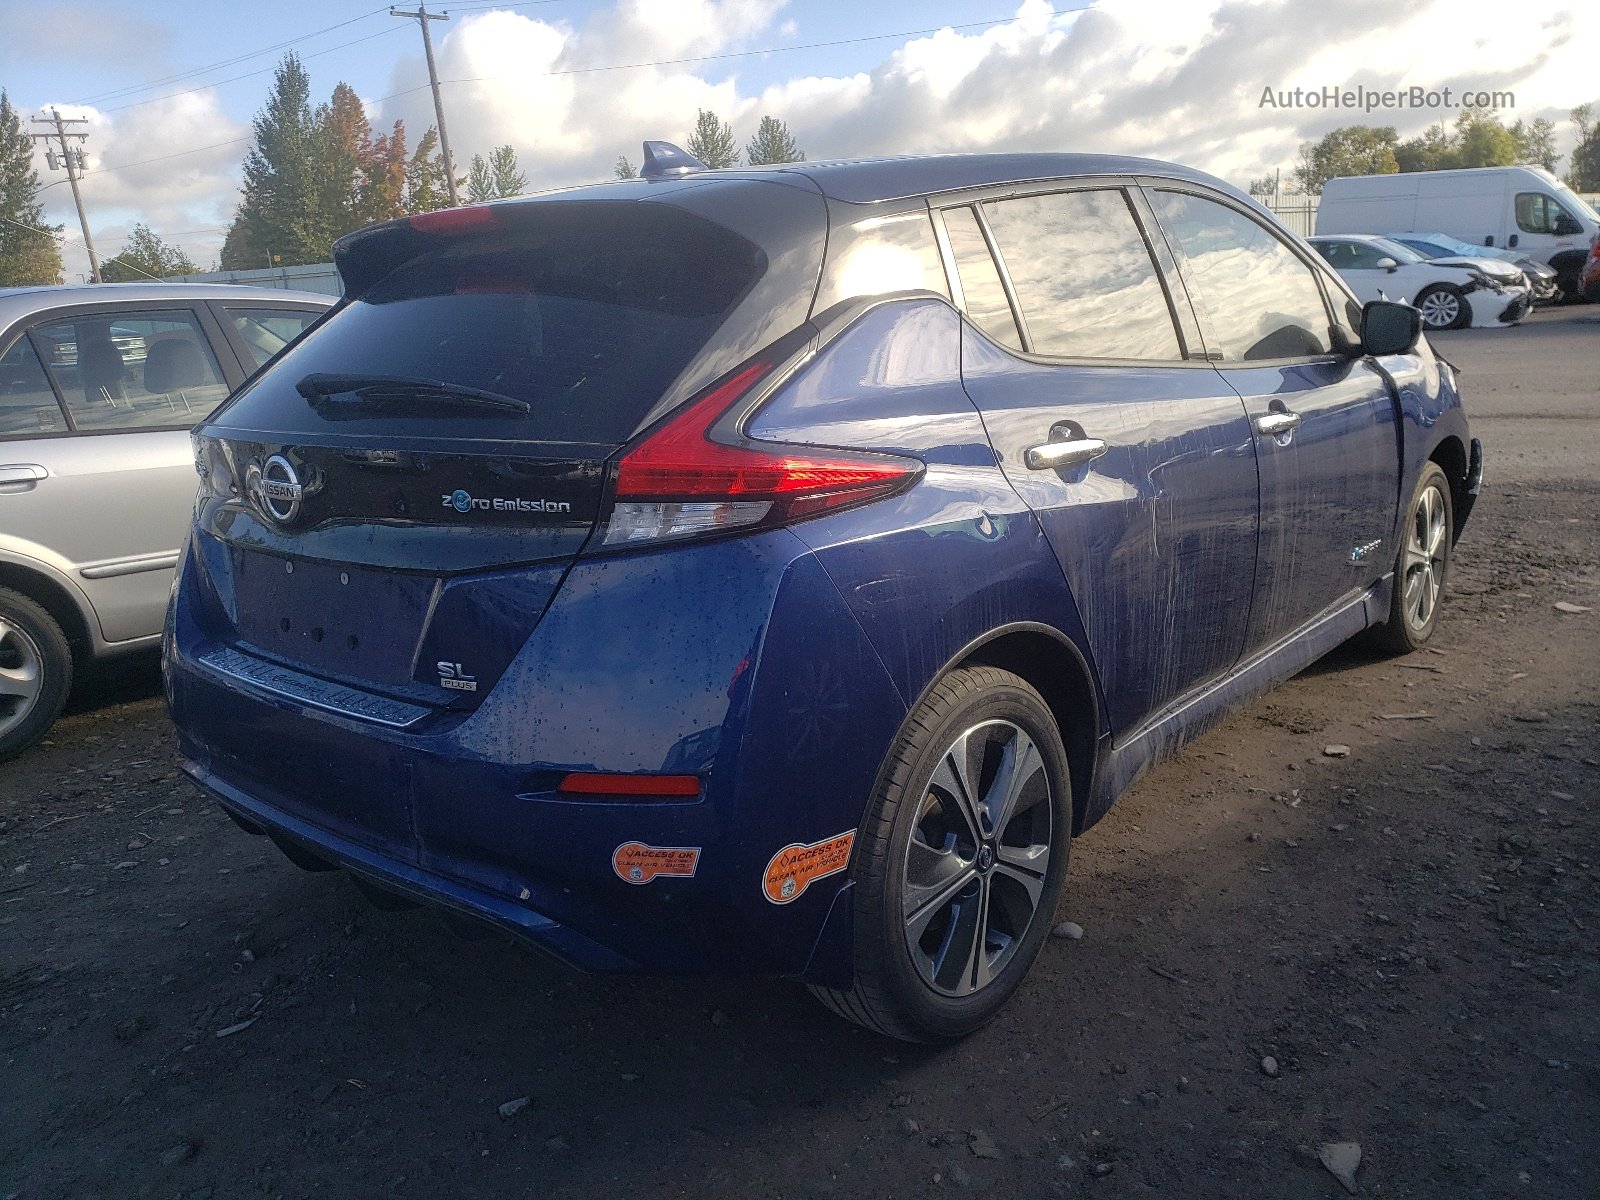 2019 Nissan Leaf S Plus Синий vin: 1N4BZ1CP5KC311329